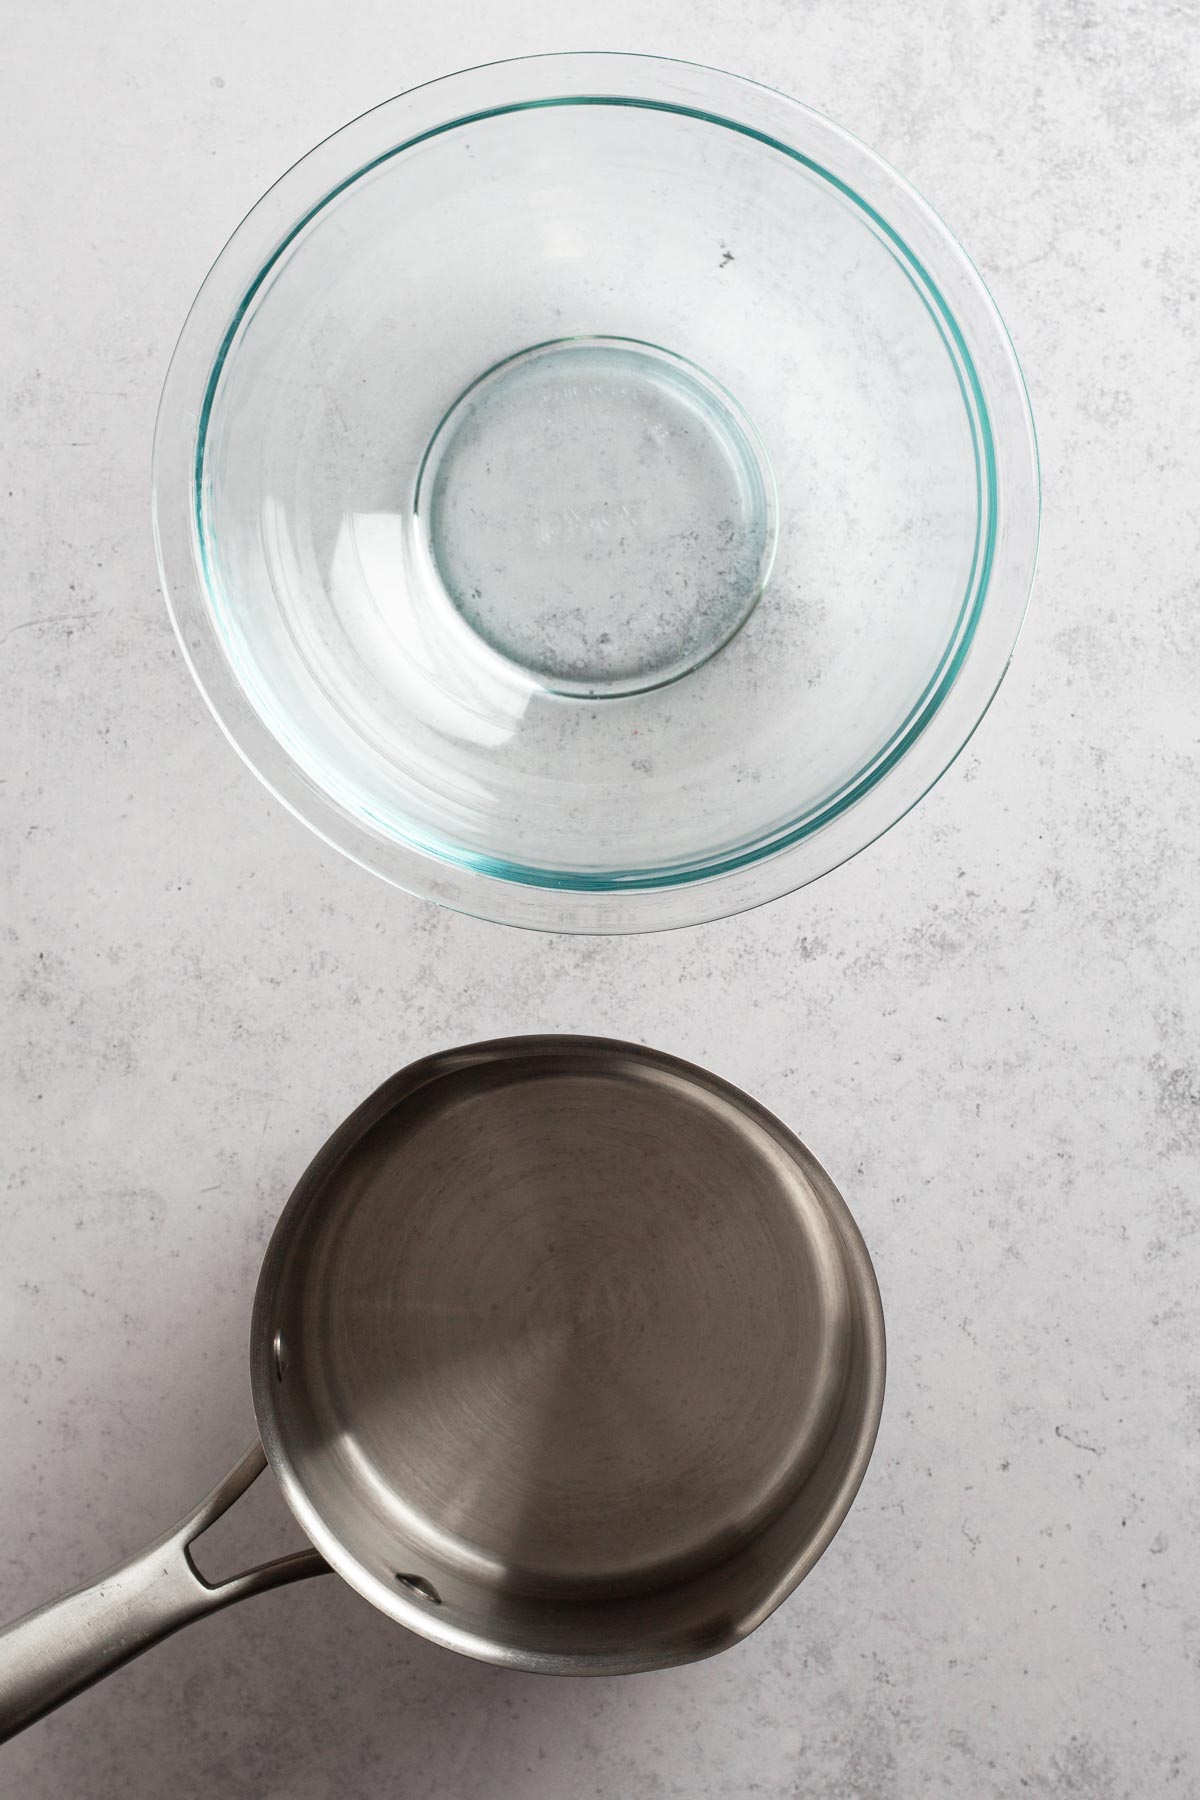 saucepan and glass bowl on a gray surface